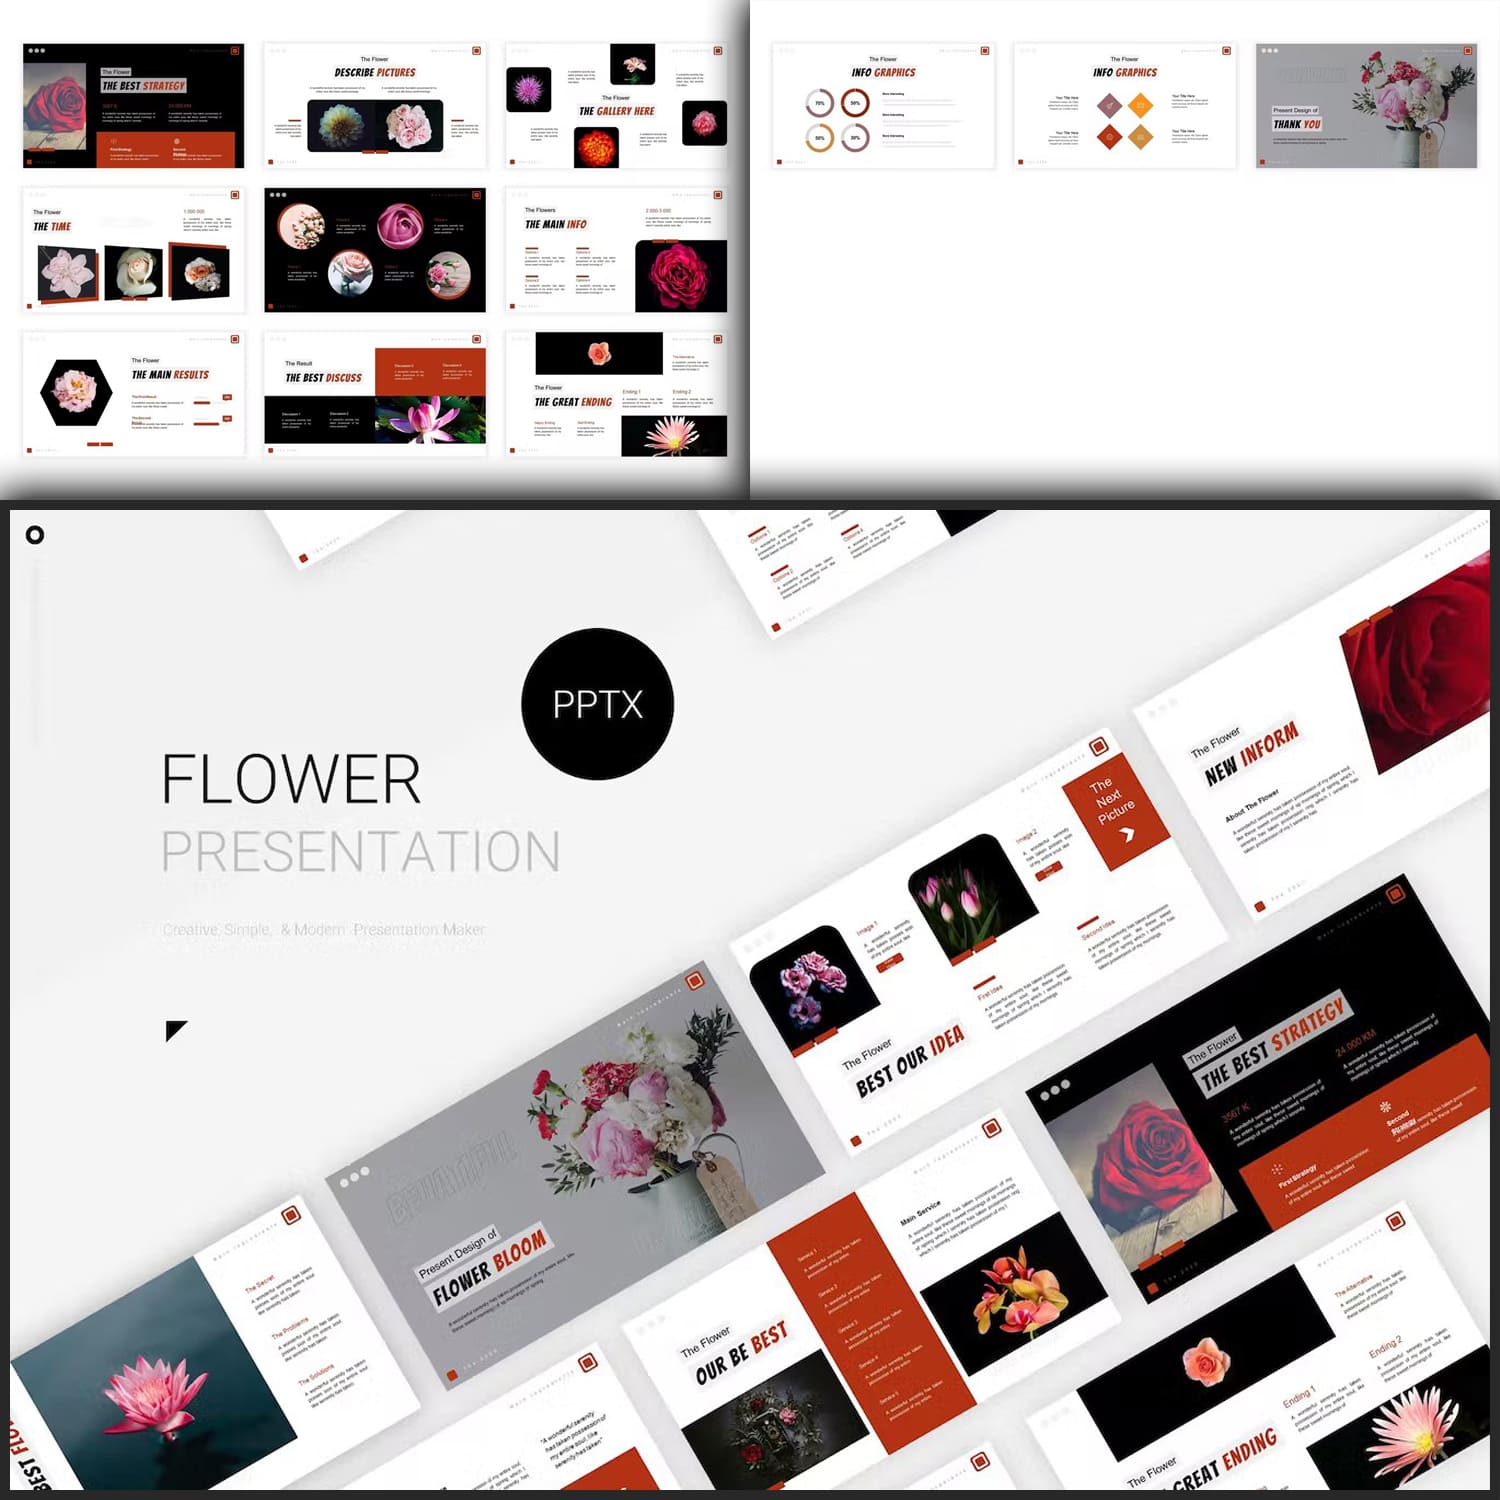 Flower Bloom - Powerpoint Template created by Fannanstudio.